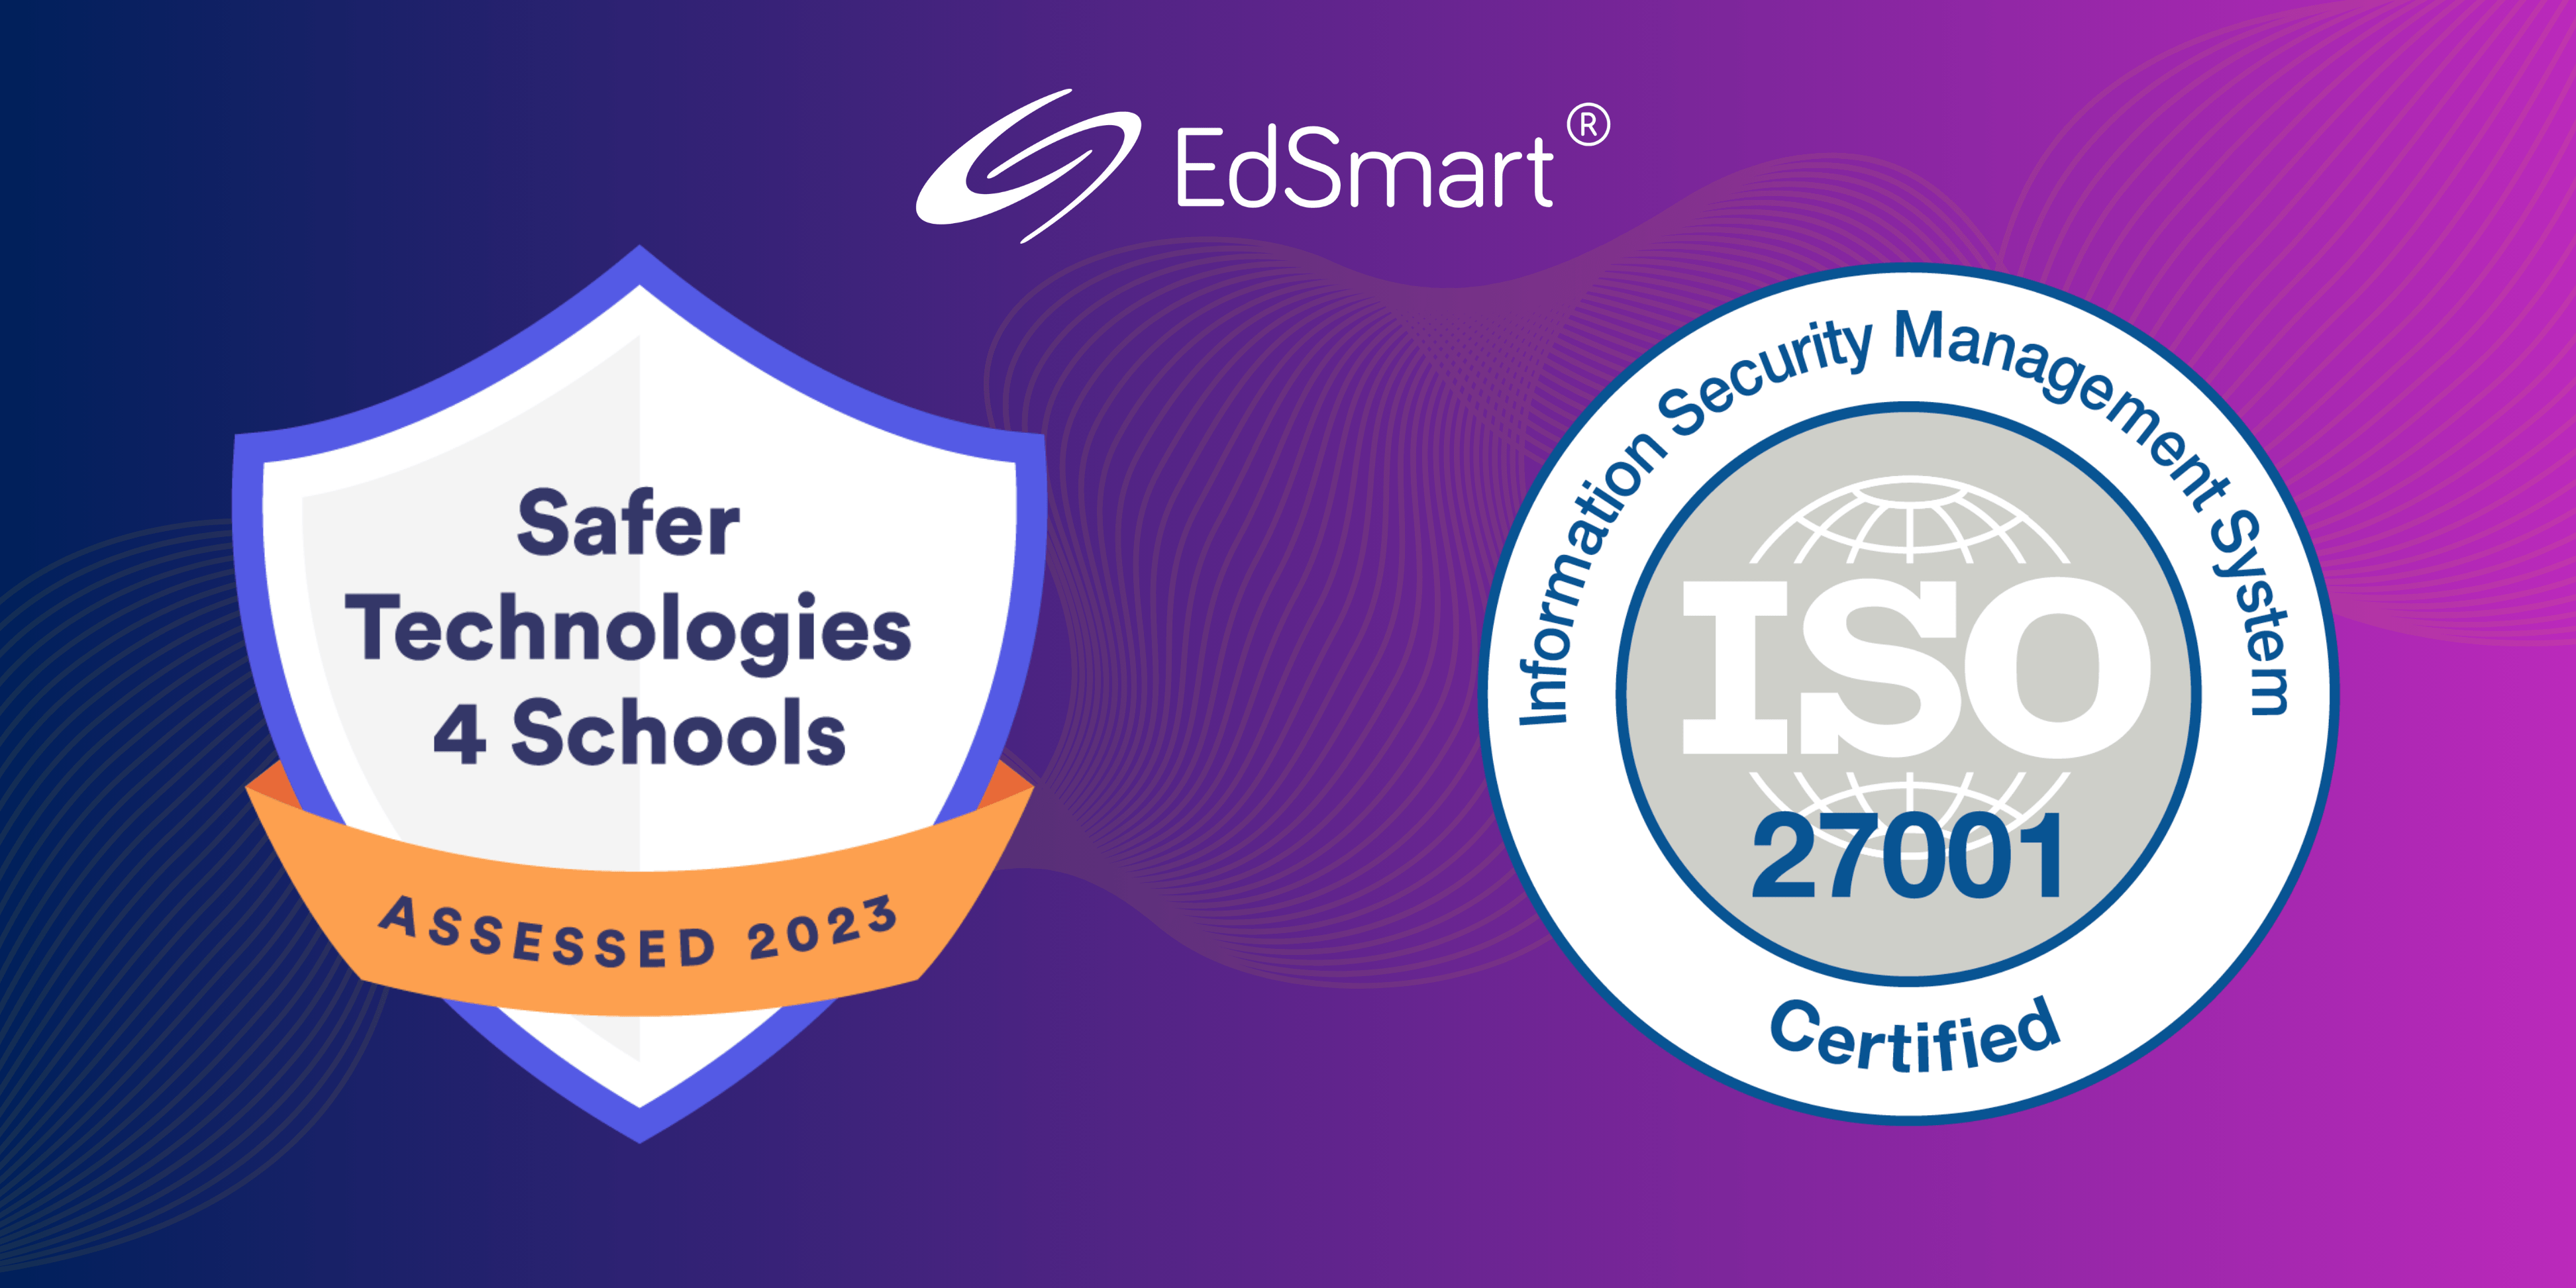 EdSmart is part of the Safer Schools 4 Technology (ST4S) Badge Program